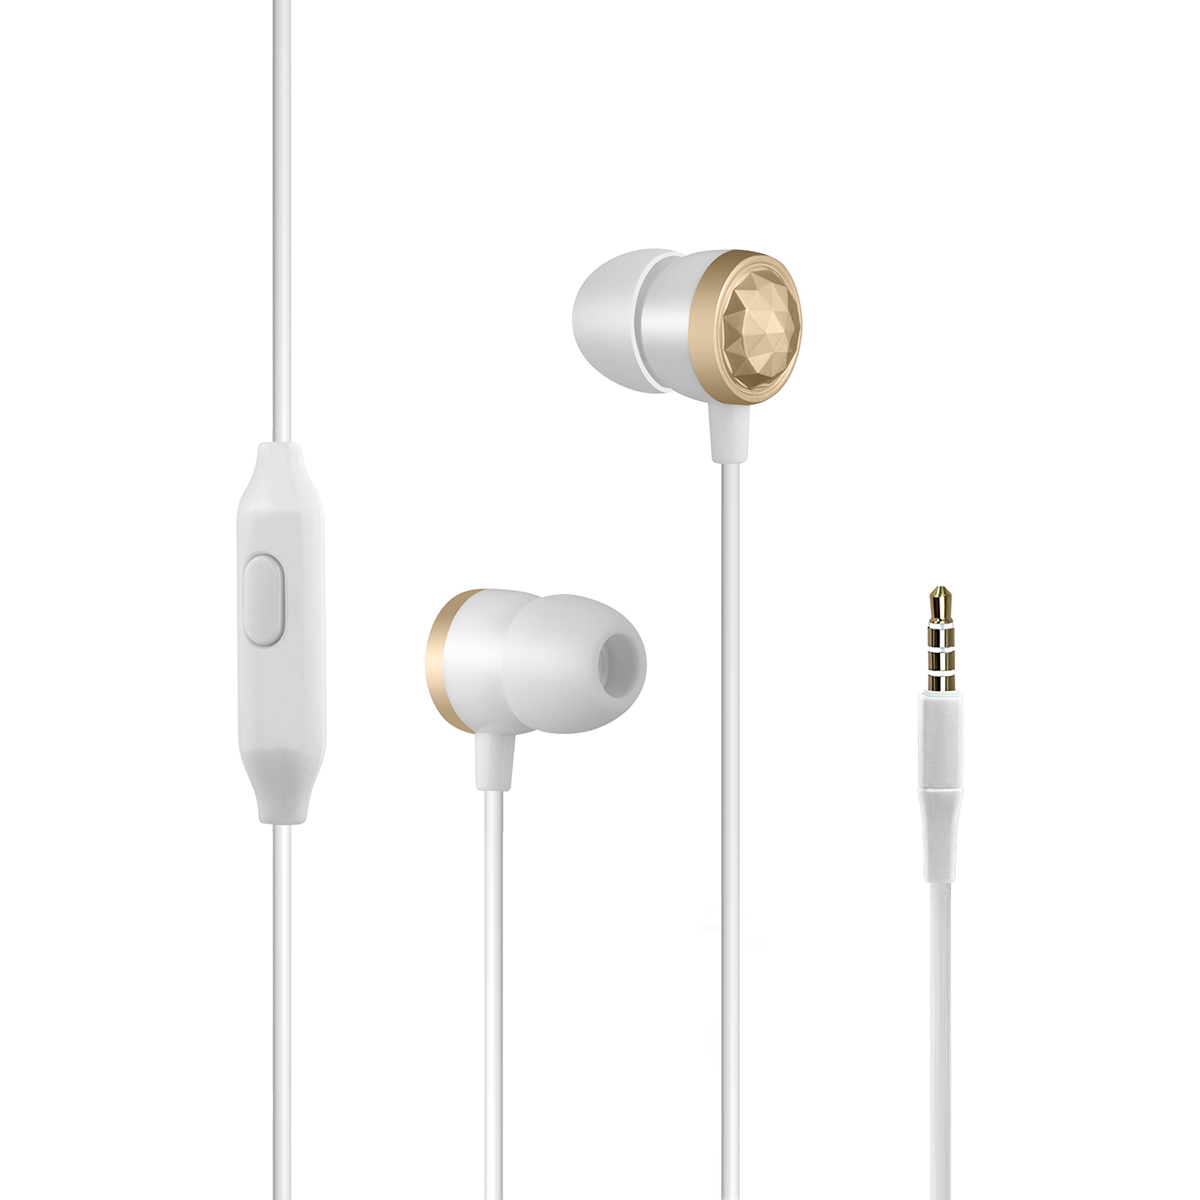 PROMATE INGOT Metallic HiFi Stereo In-Ear Wired Earphones ( GOLD )